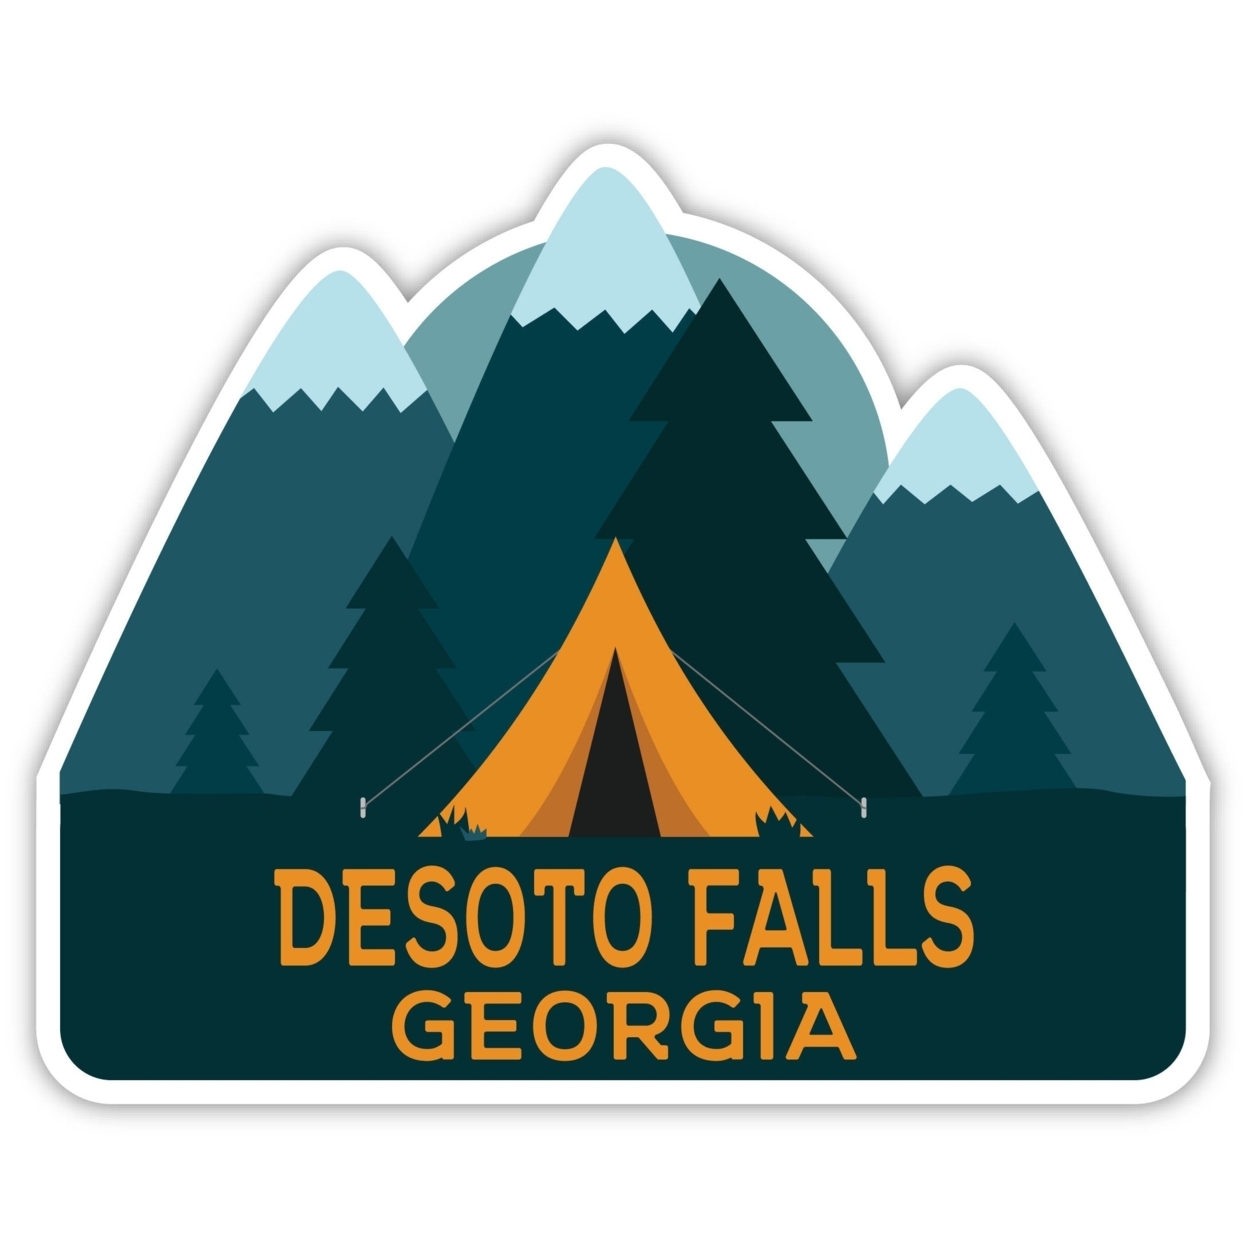 DeSoto Falls Georgia Souvenir Decorative Stickers (Choose Theme And Size) - 4-Pack, 12-Inch, Tent